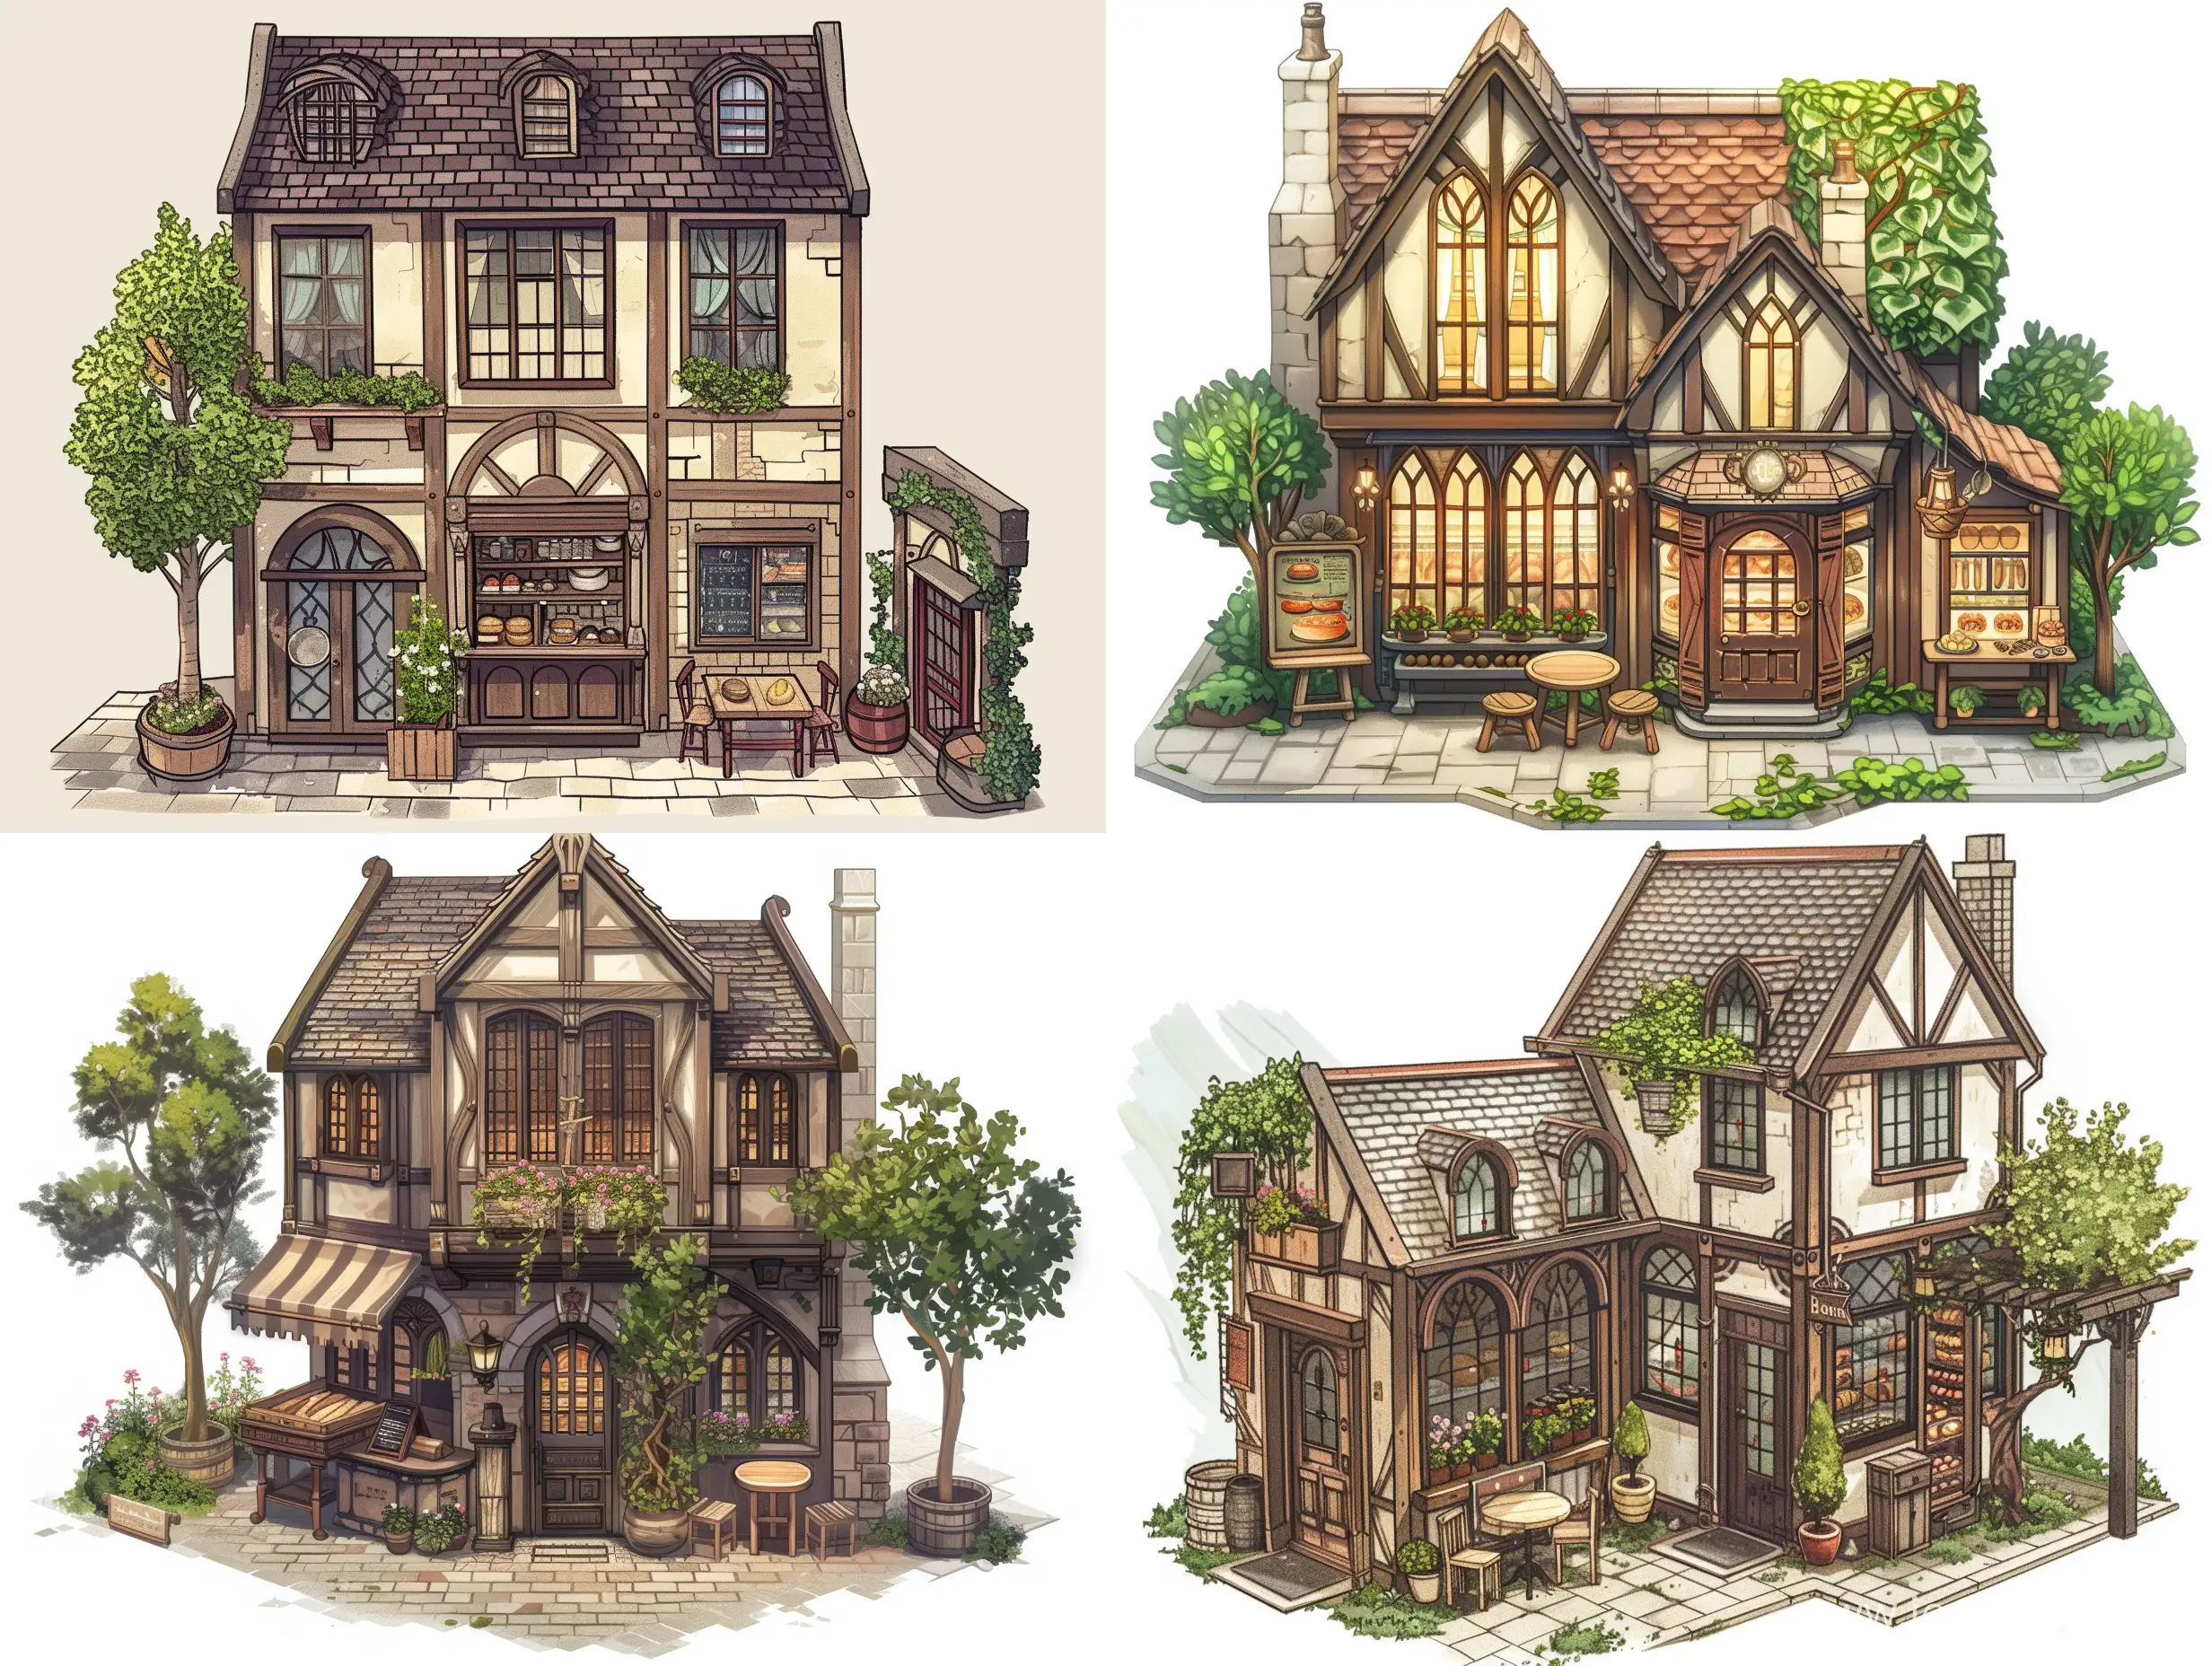 Charming-TudorStyle-Bakery-with-Garden-and-TreeLined-Entrance